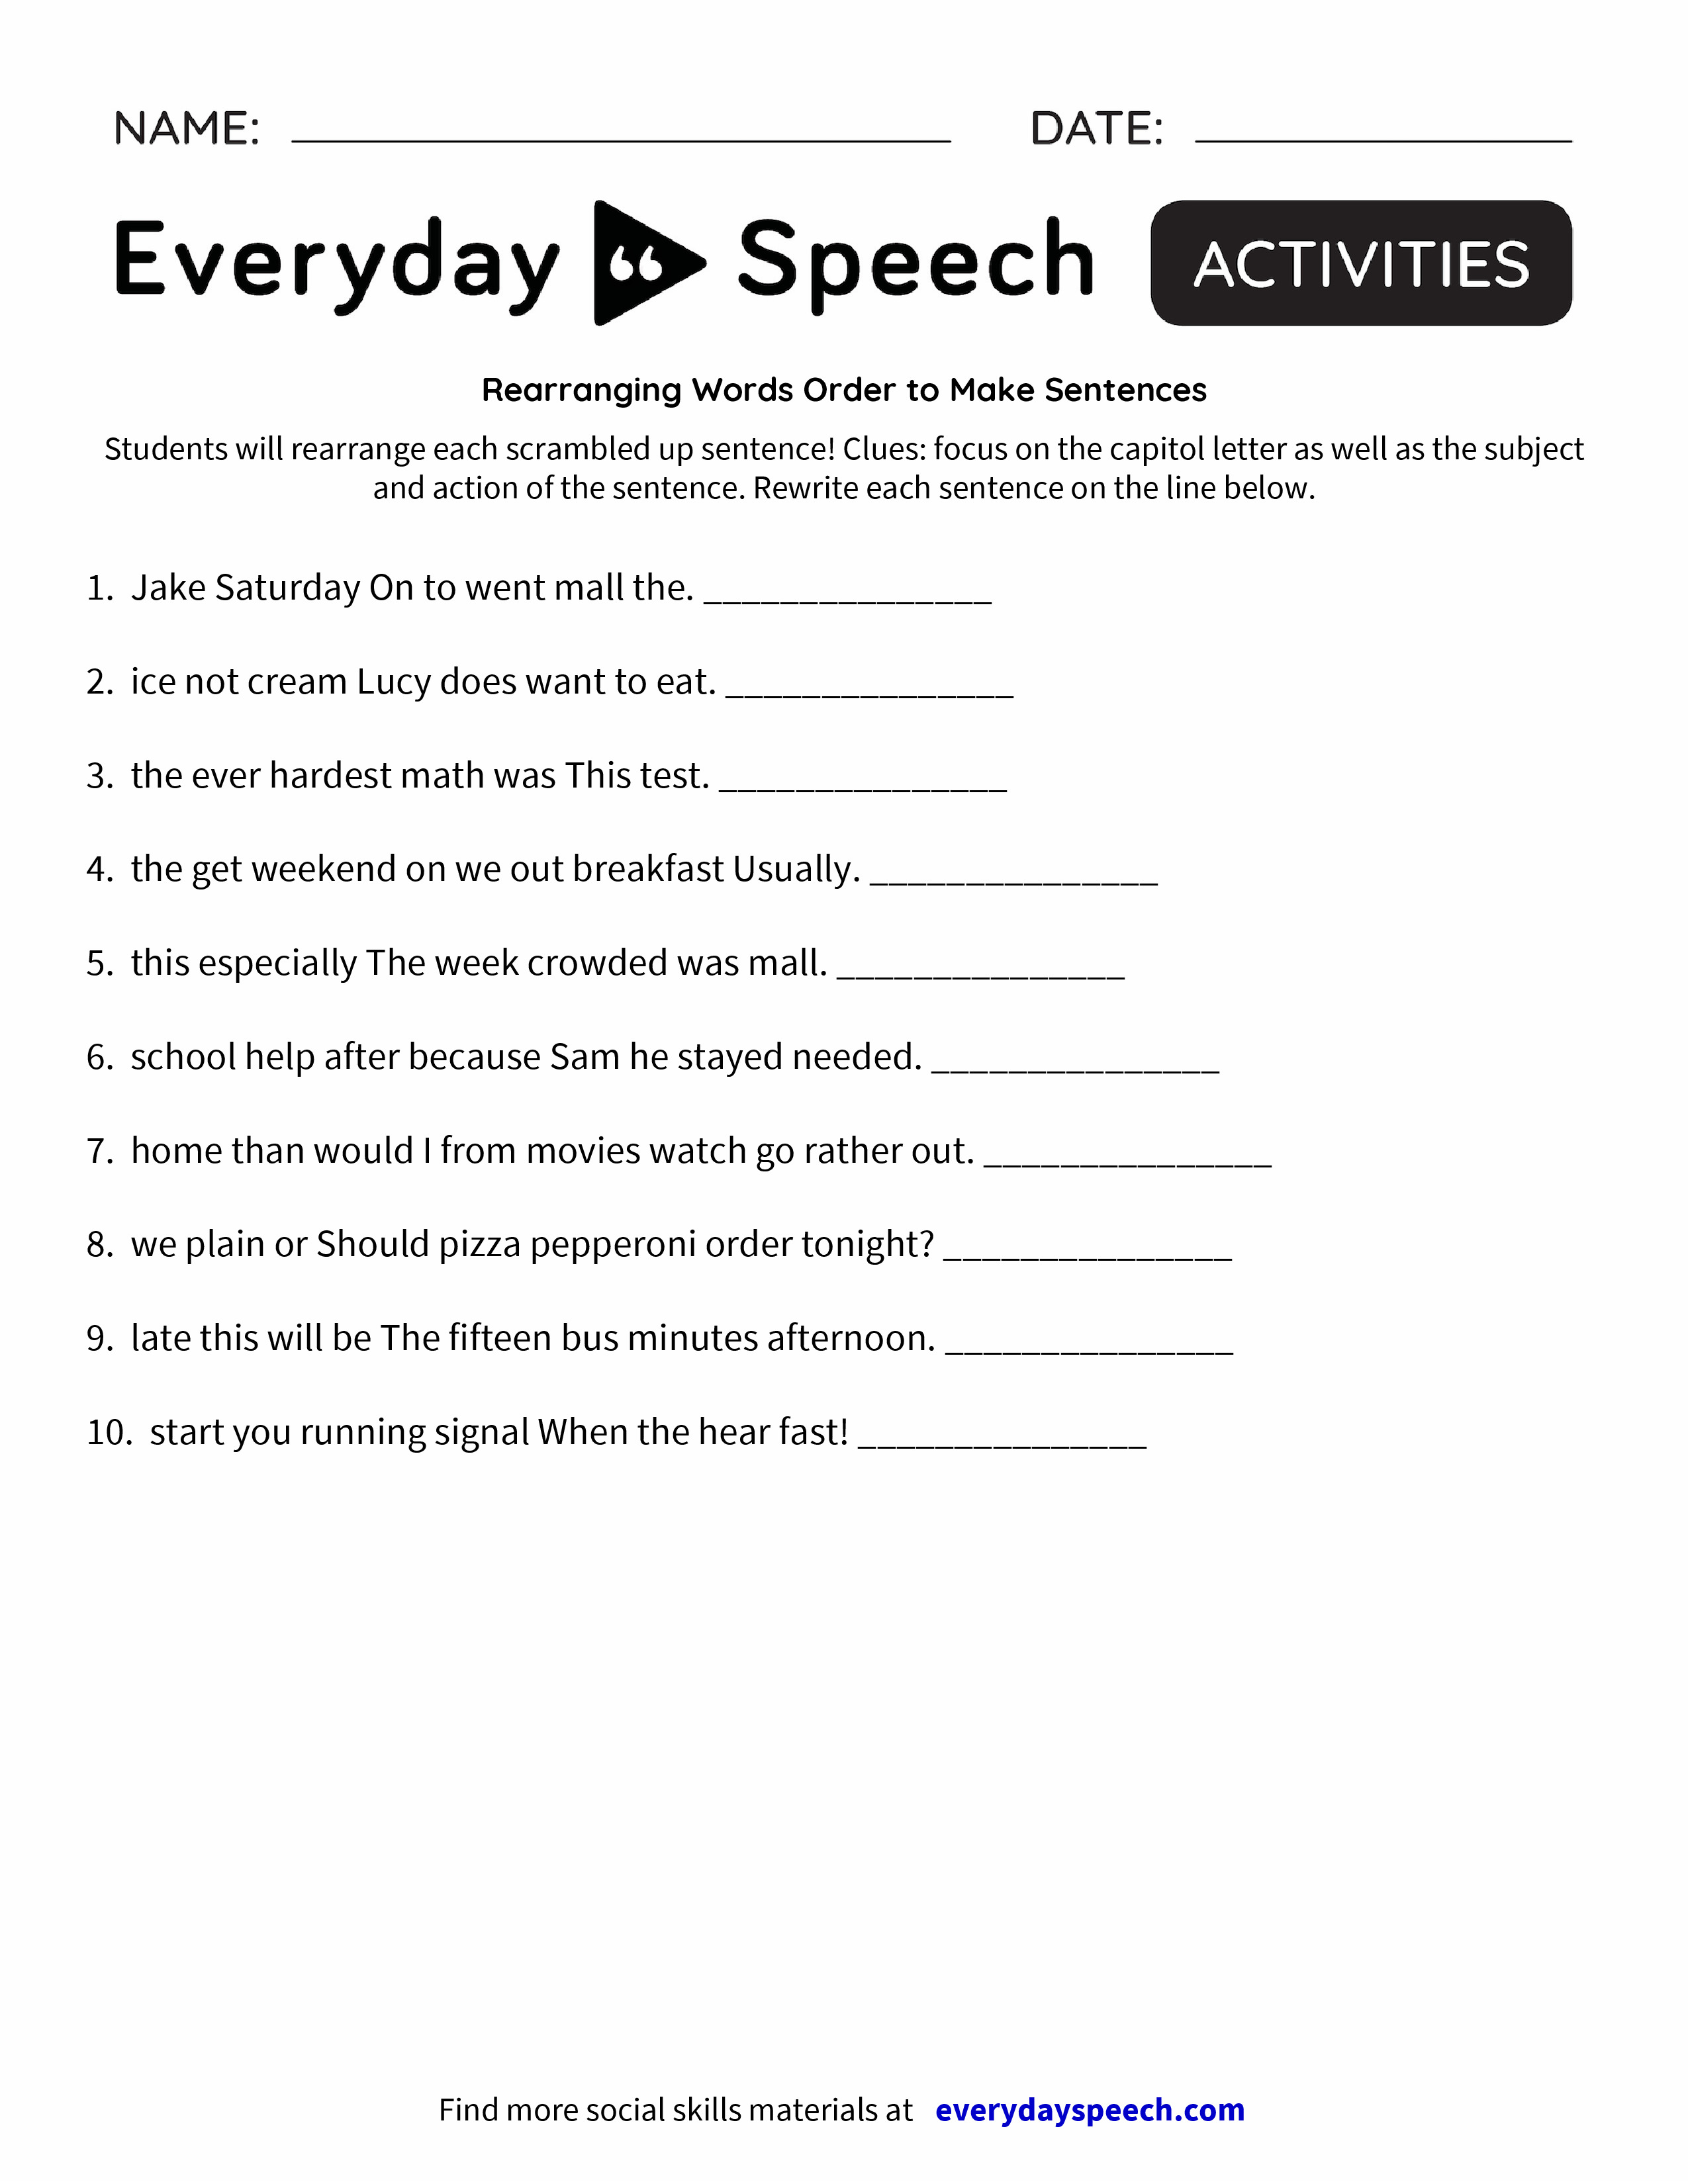 rearranging-words-order-to-make-sentences-everyday-speech-everyday-speech